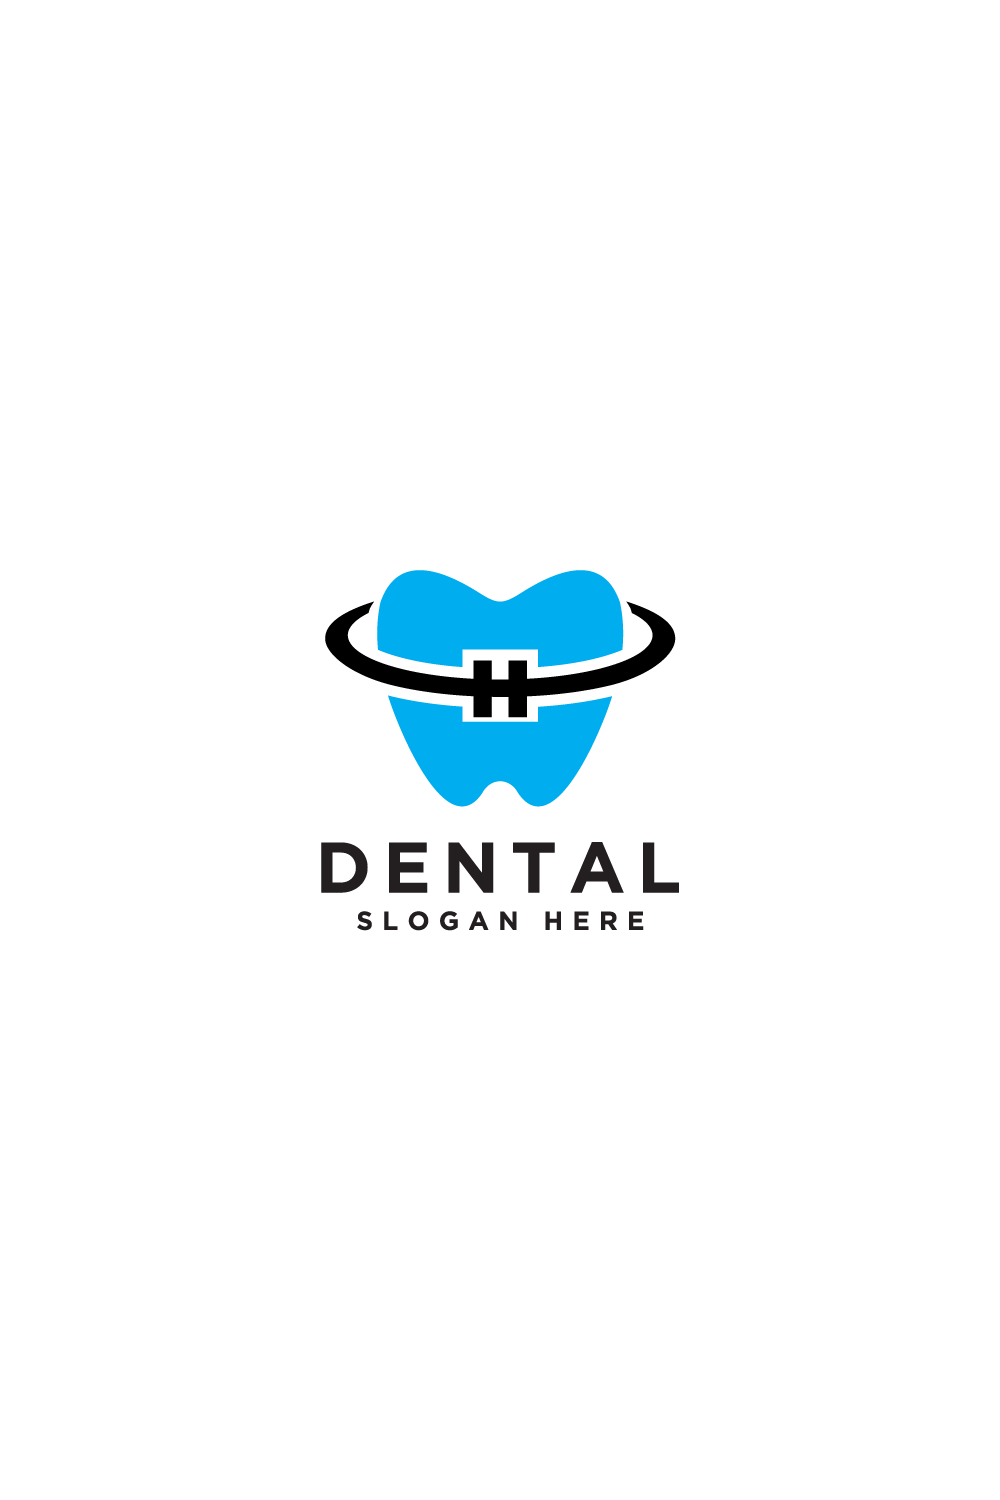 dental logo pinterest preview image.